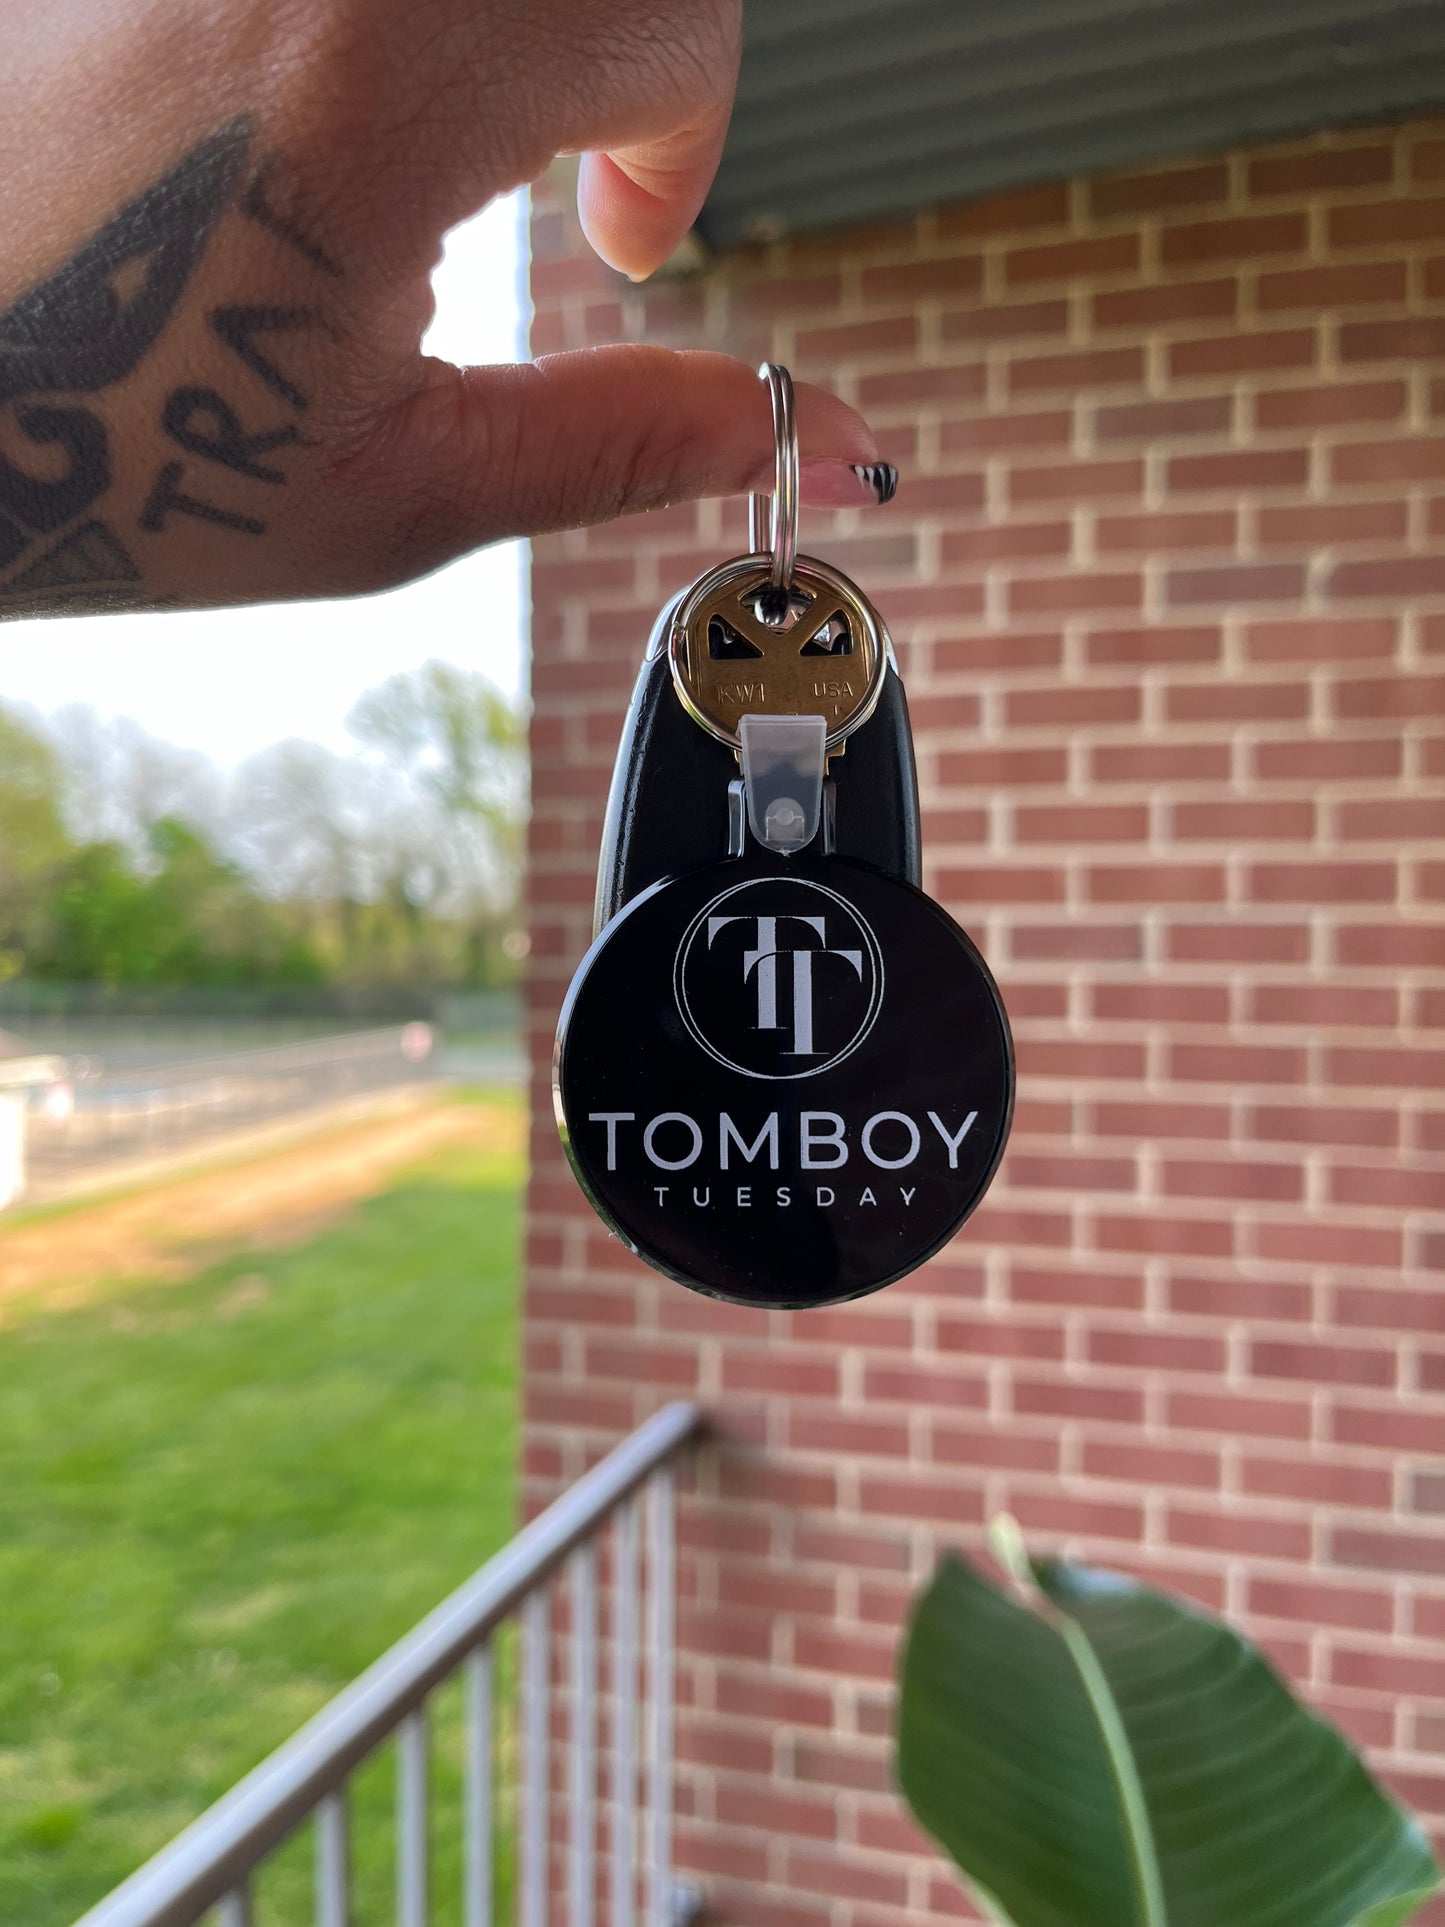 Tomboy Tuesday Keychain